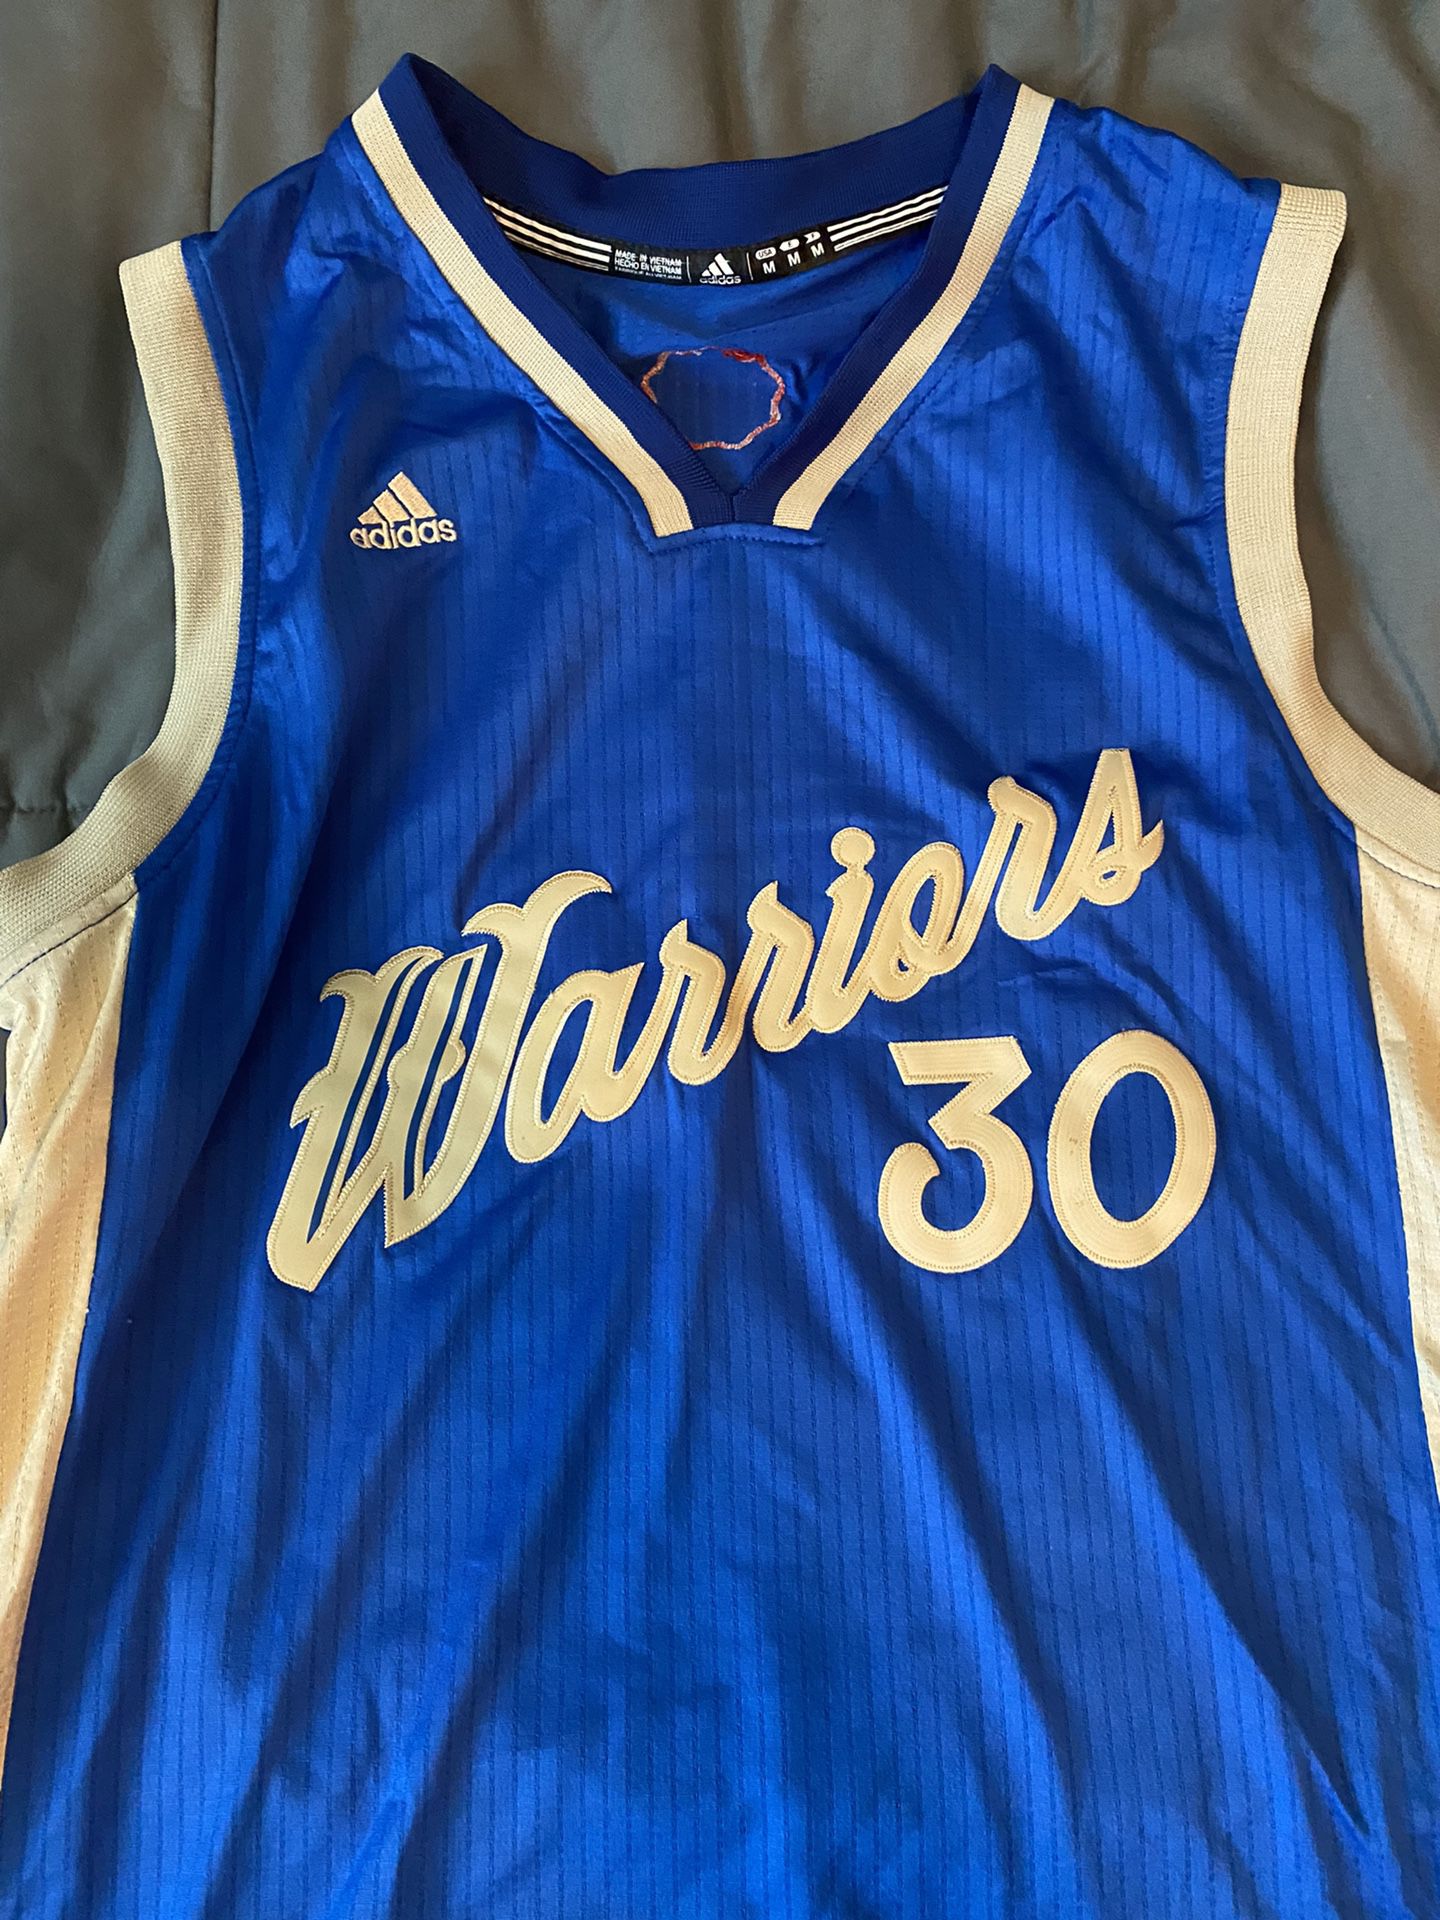 Golden State Warriors Mitchell & Ness 1995-1997 Jersey Shirt (Men's Medium)  for Sale in Pleasanton, CA - OfferUp